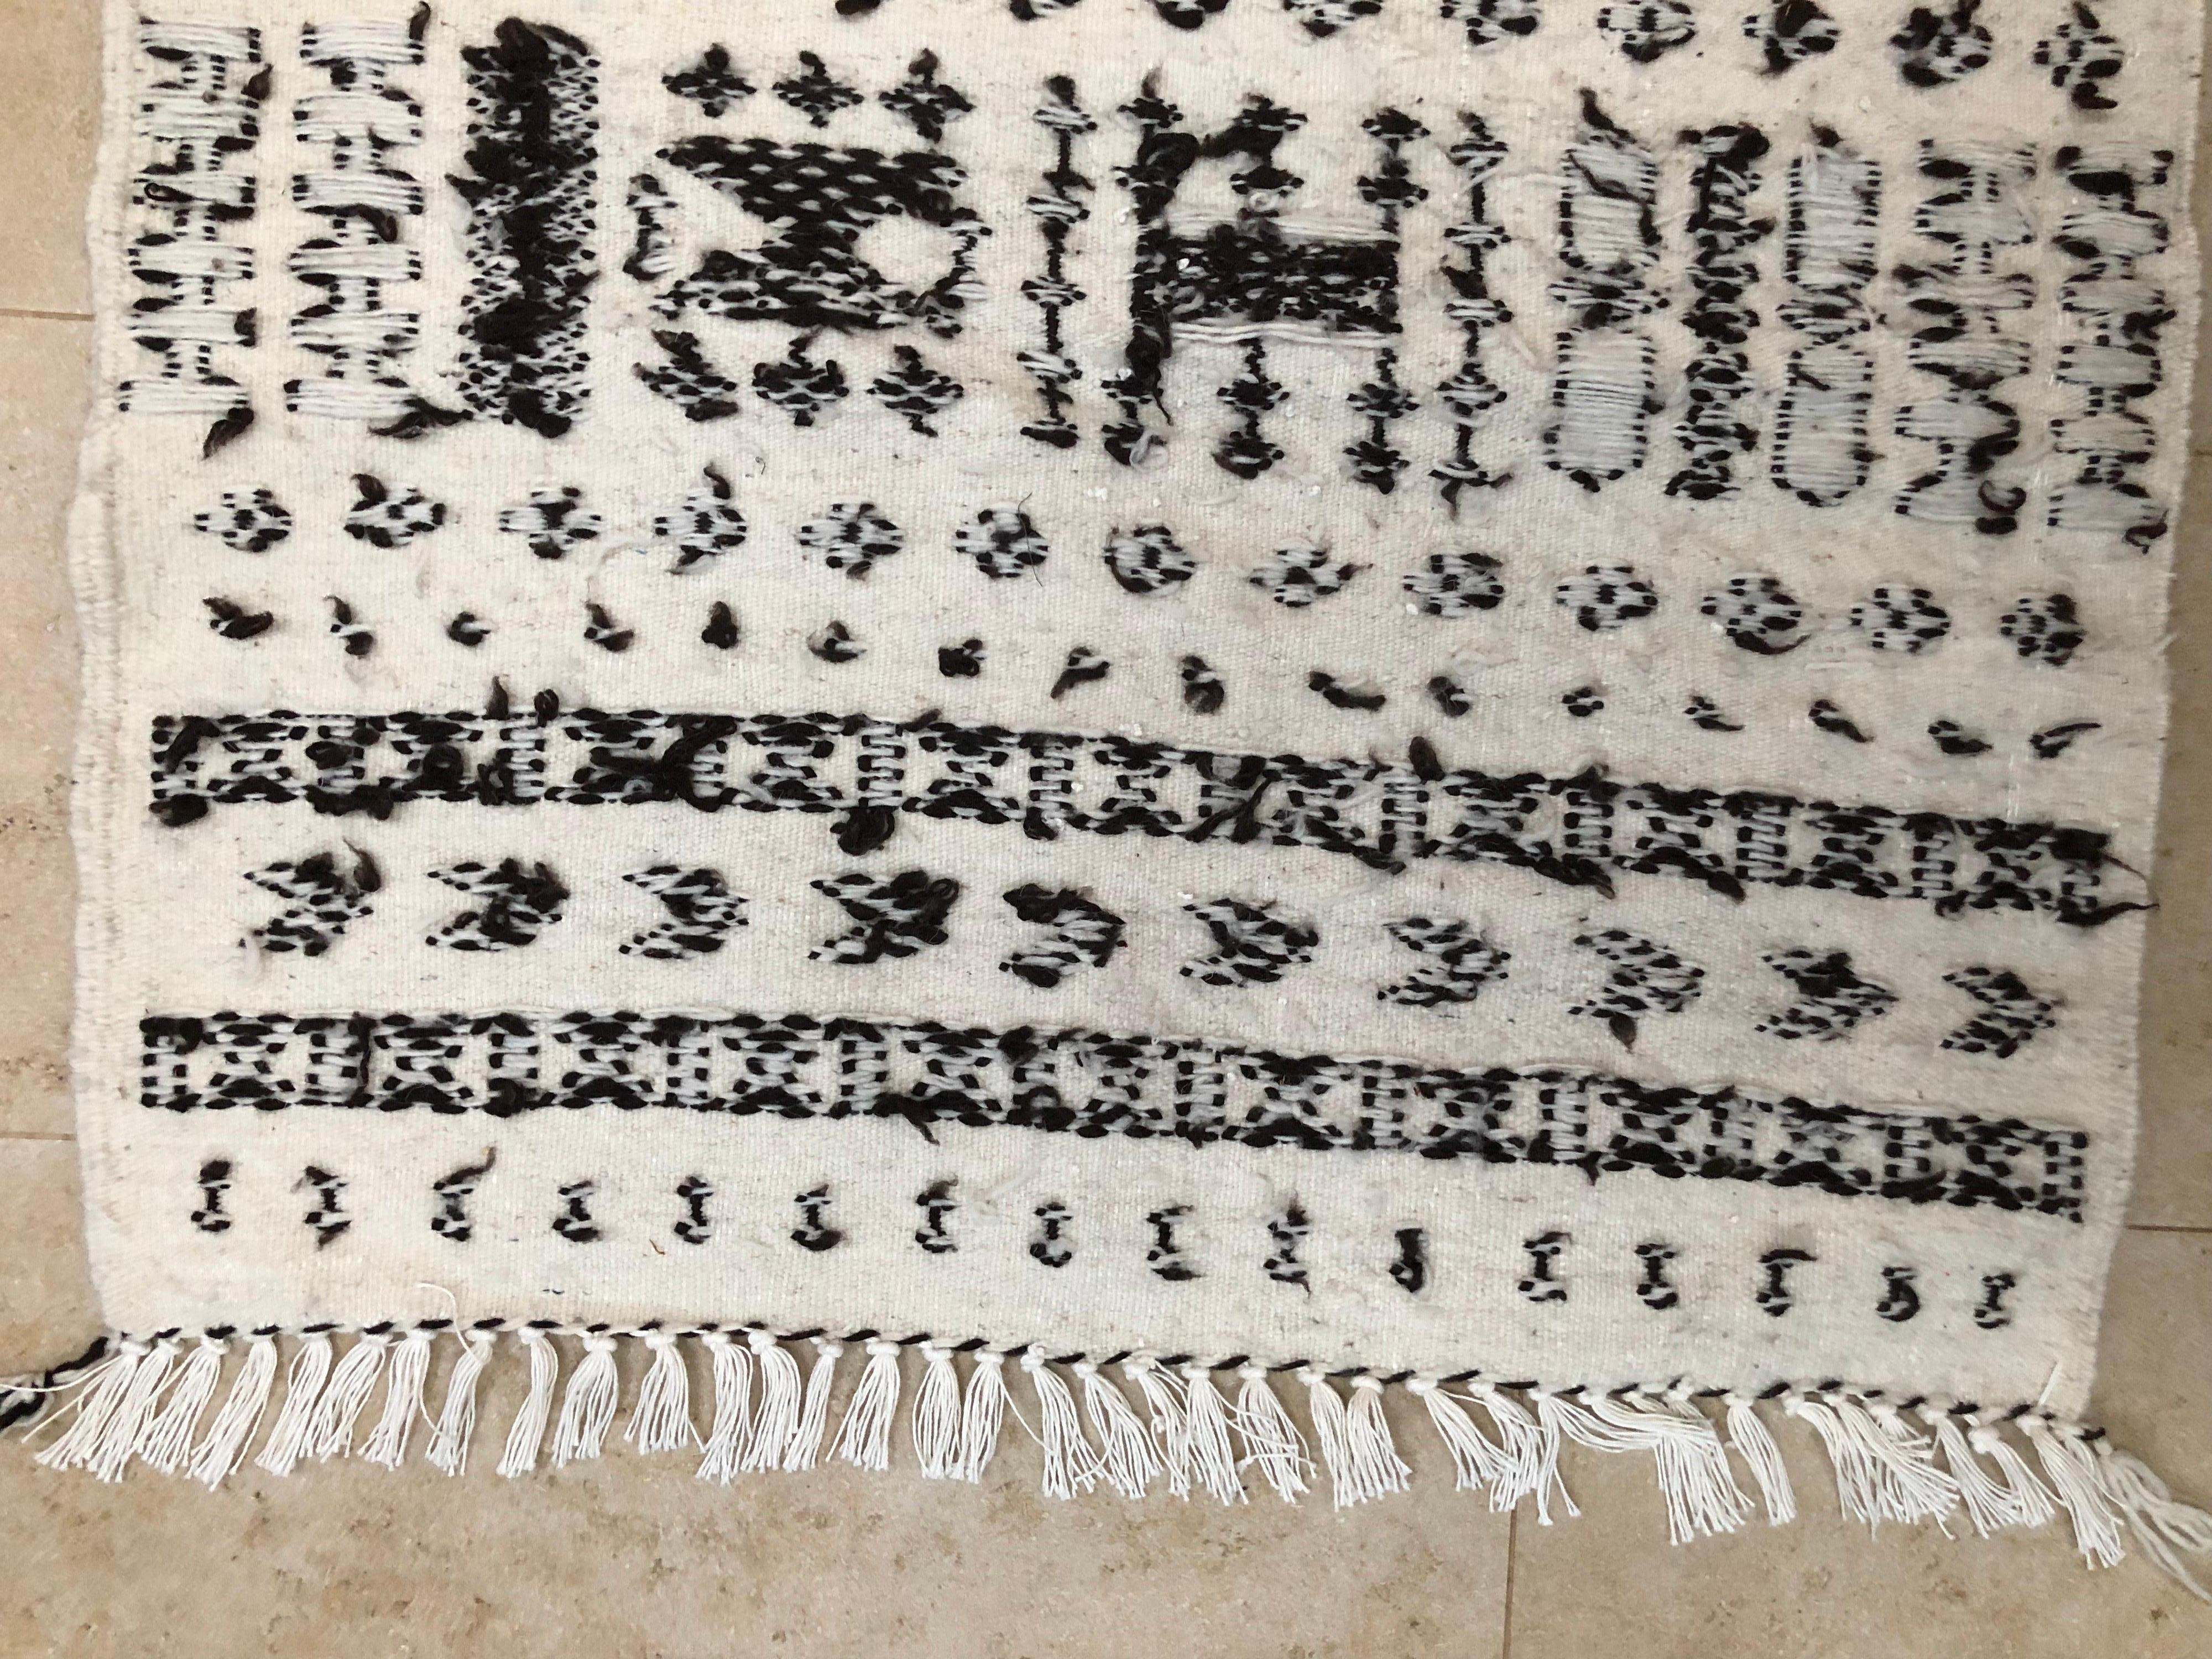 Hand-Loomed Algerian Berber Tribal Natural Wool Throw Rug - Black White Neutral 4